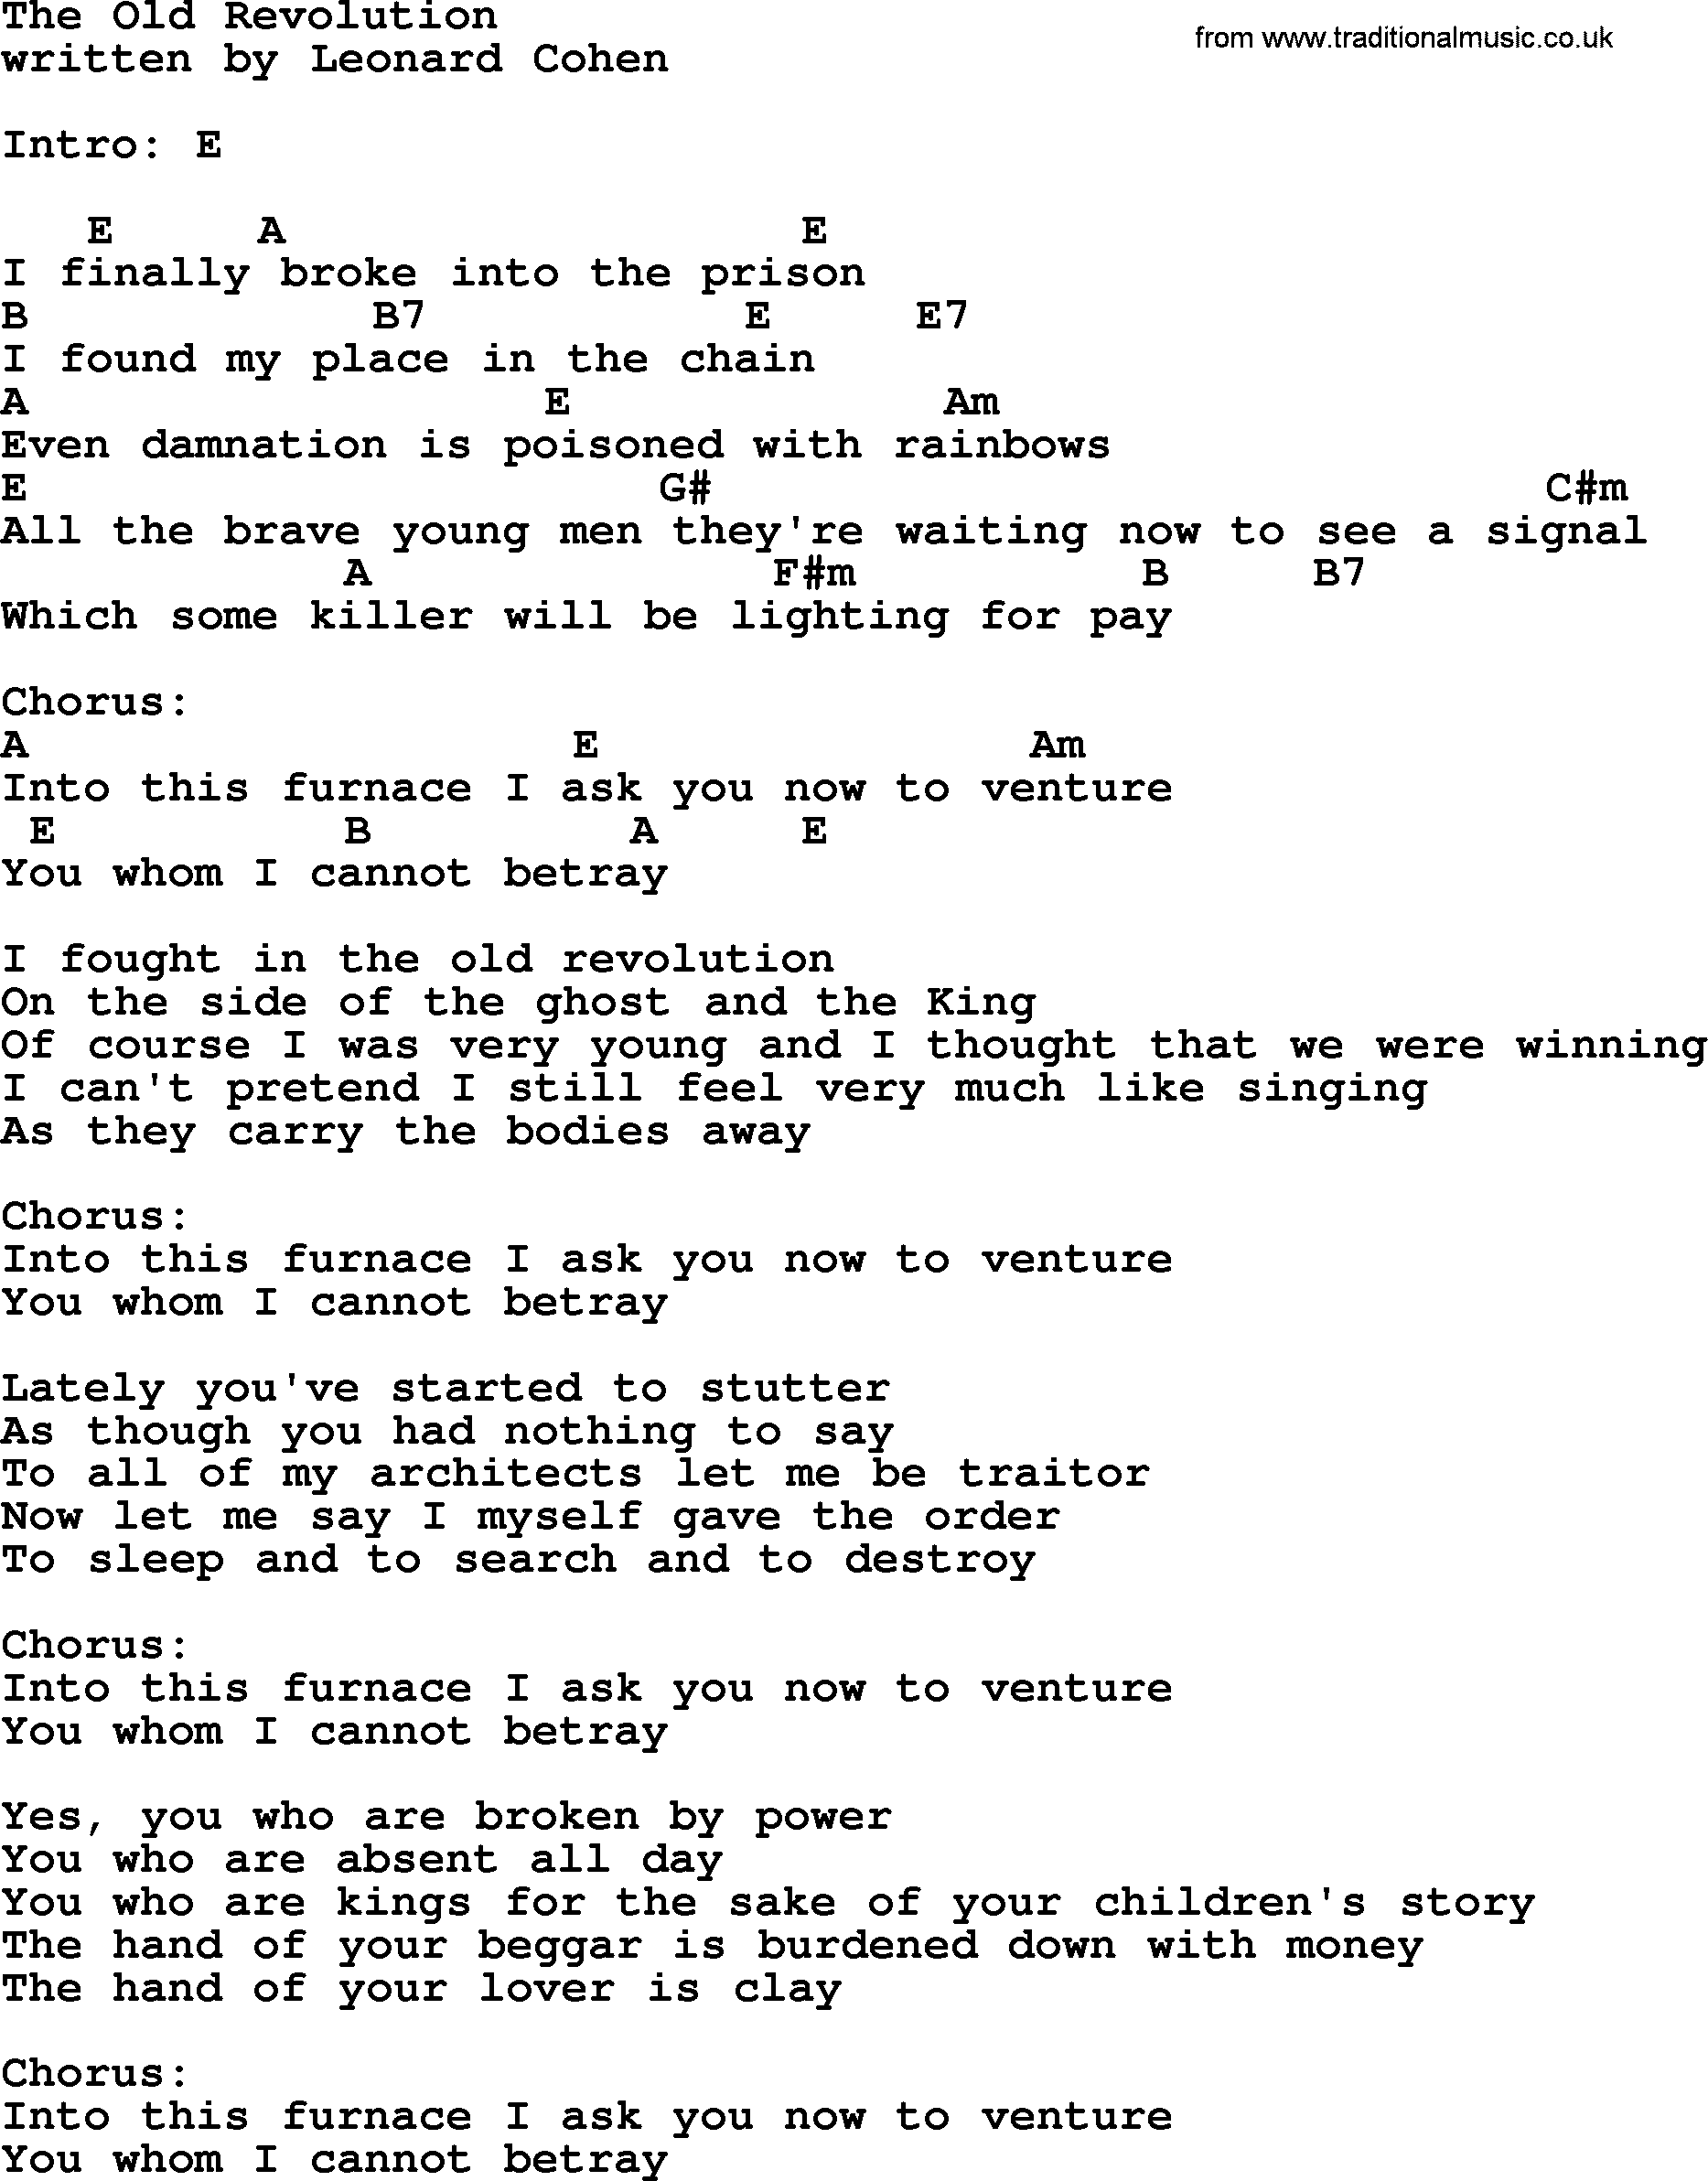 Leonard Cohen song The Old Revolution, lyrics and chords